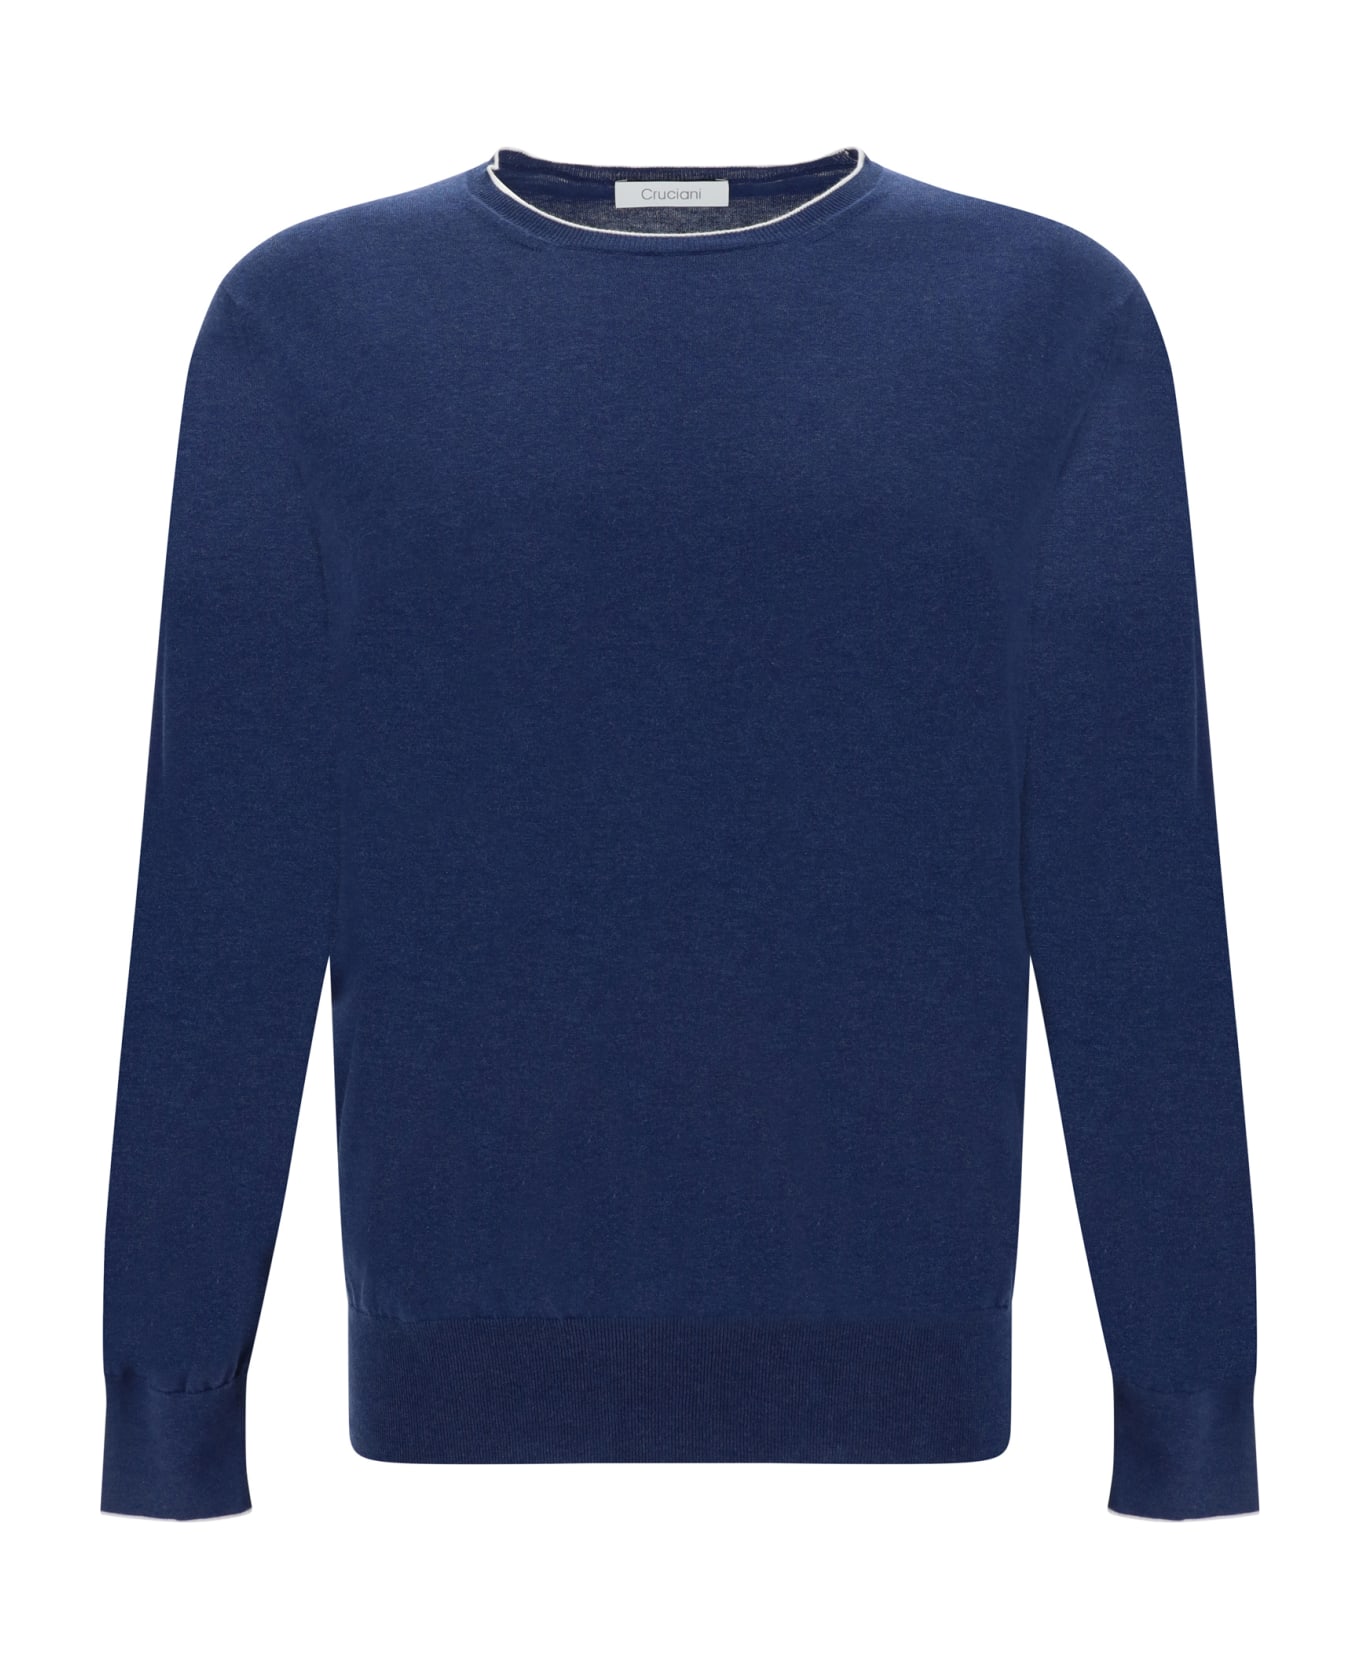 Cruciani Sweater - 41e80014